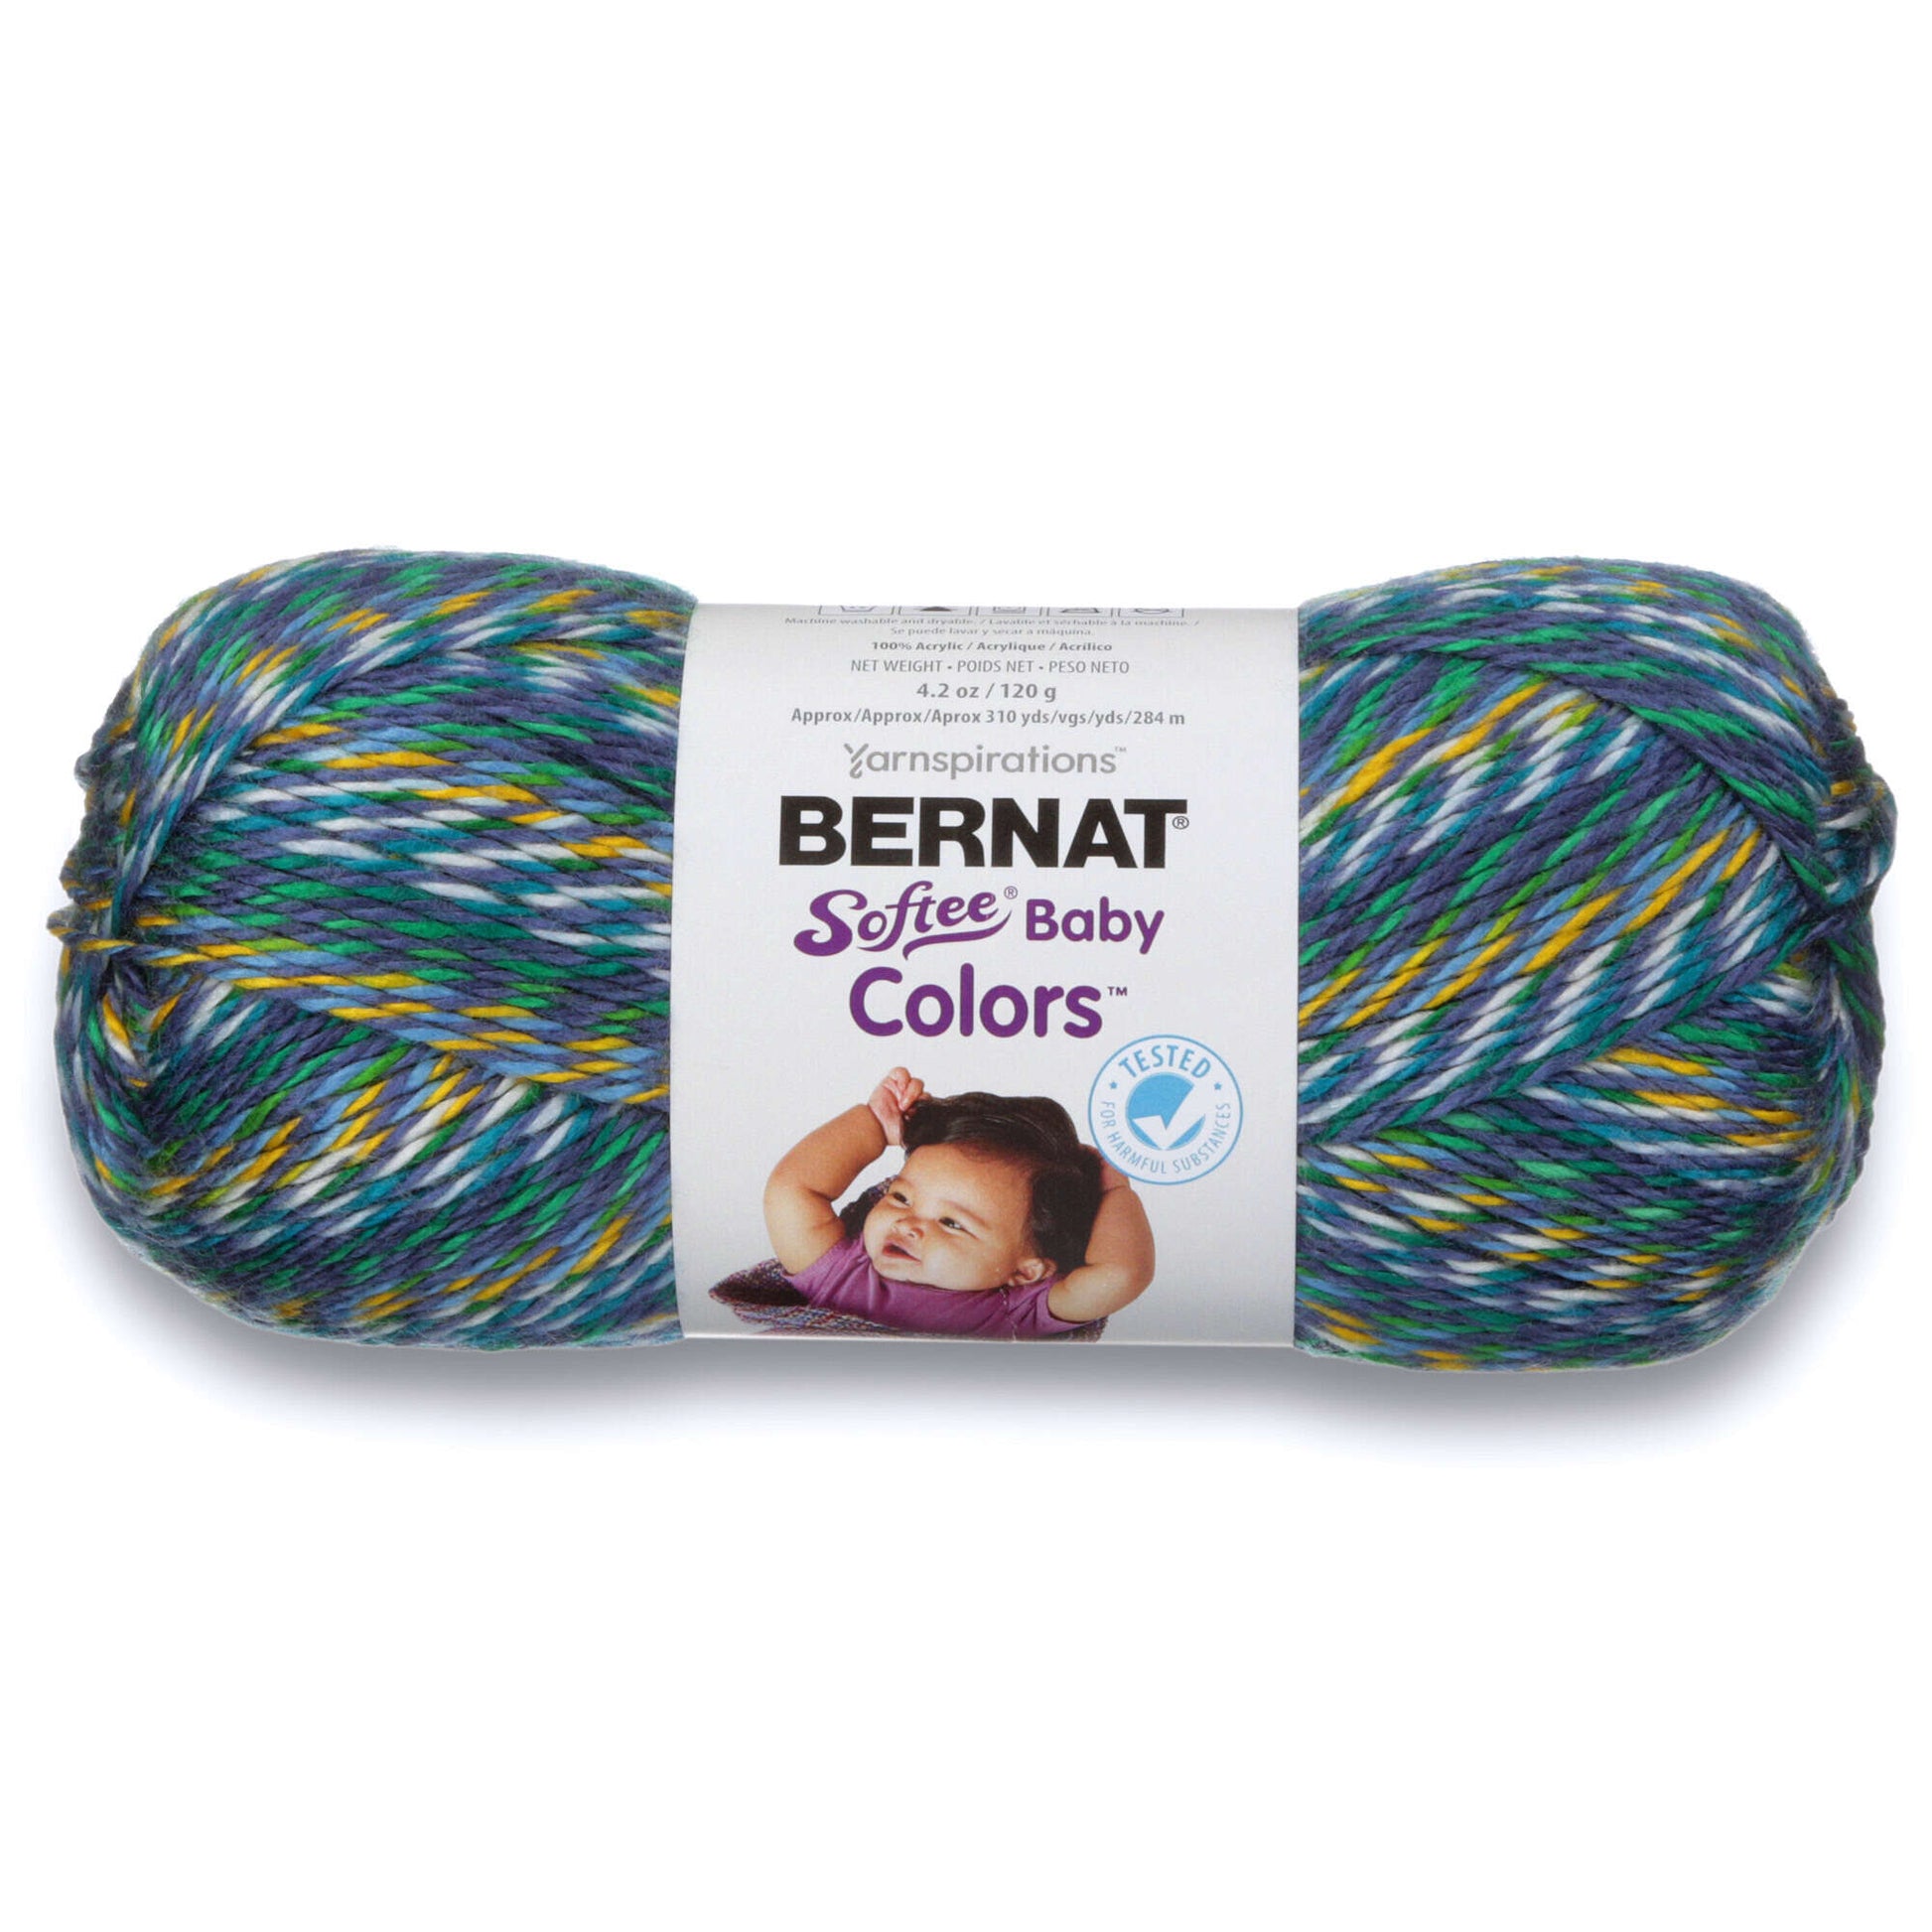 Bernat Softee Baby Colors Yarn - Discontinued Shades Blue Rainbow